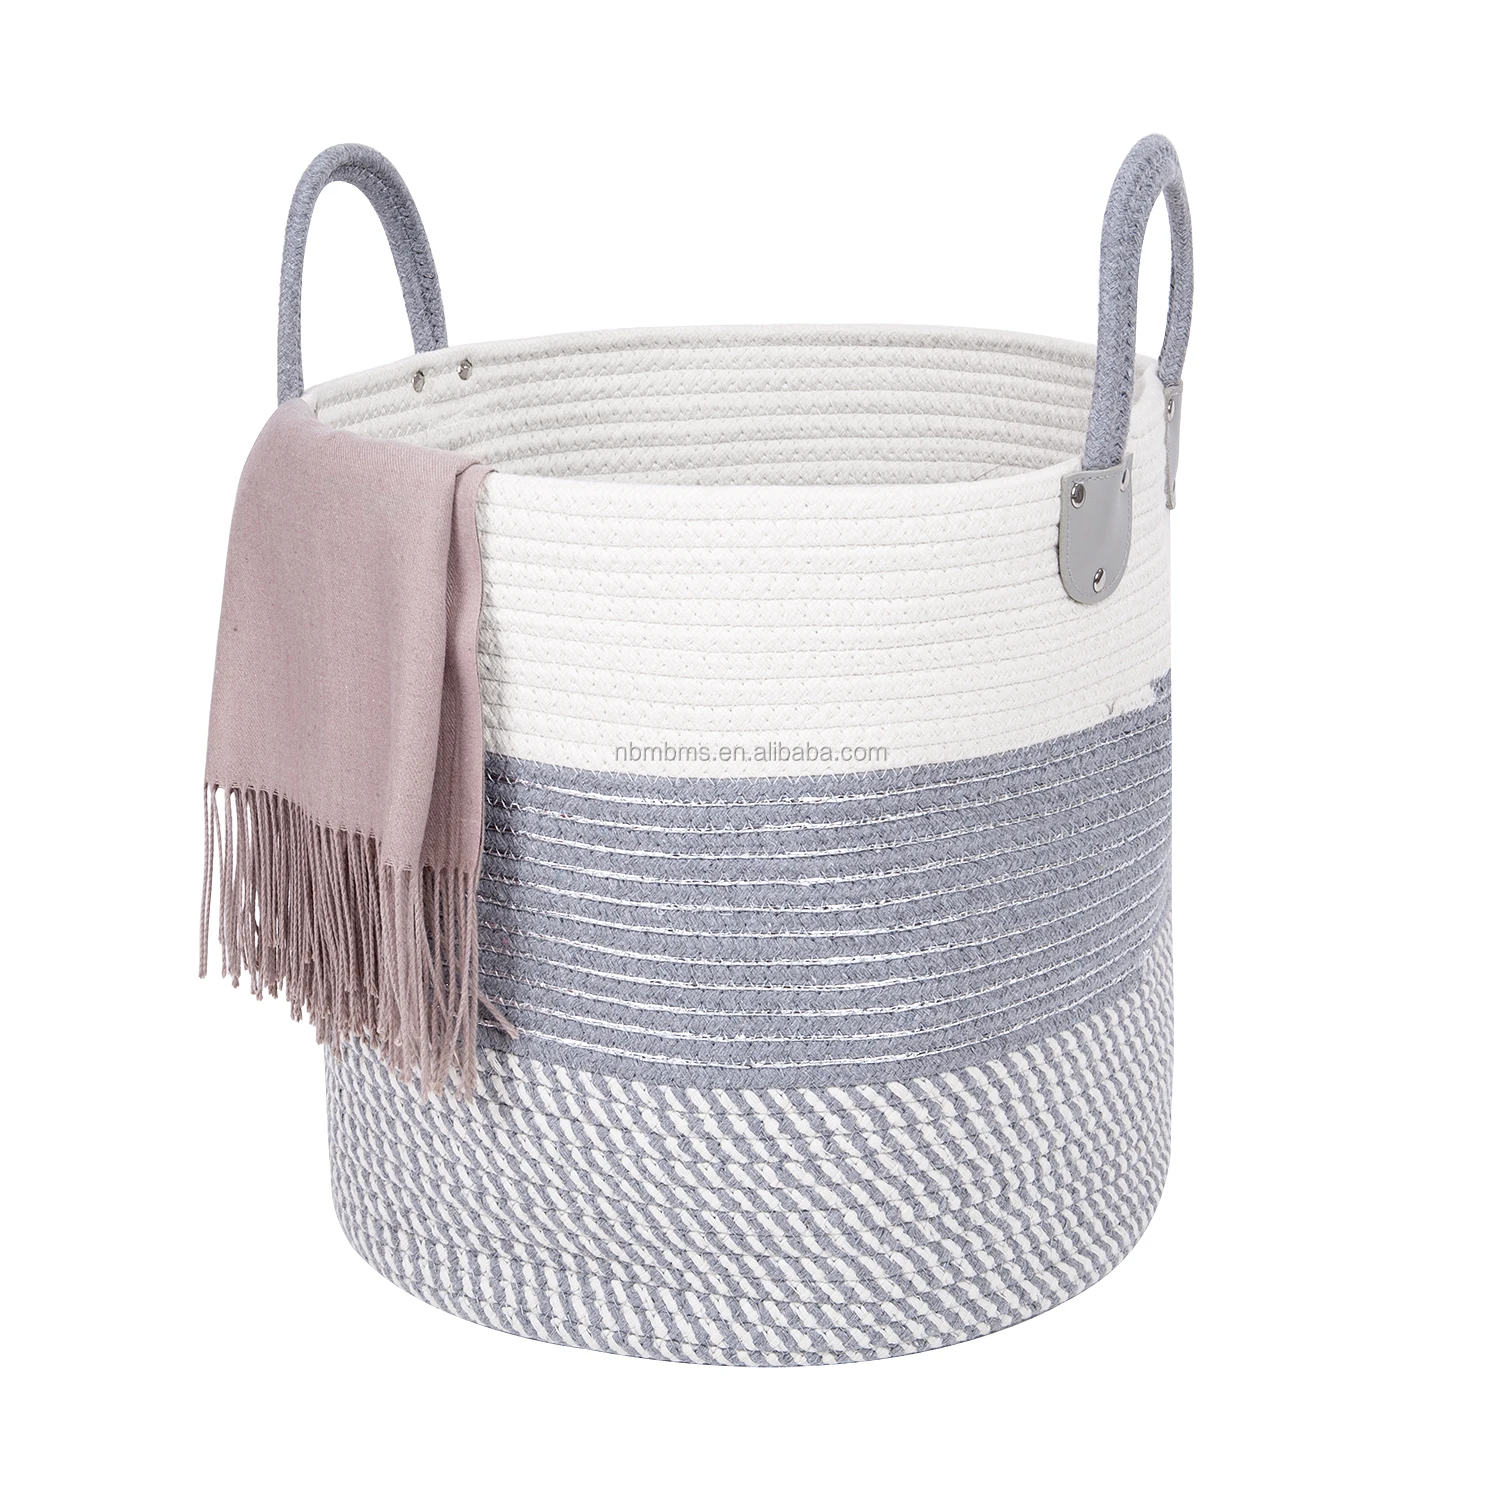 Qjmax Large Blanket Basket Rope Storage Basket Of White With Black Stitching Buy Rope Storage Basket